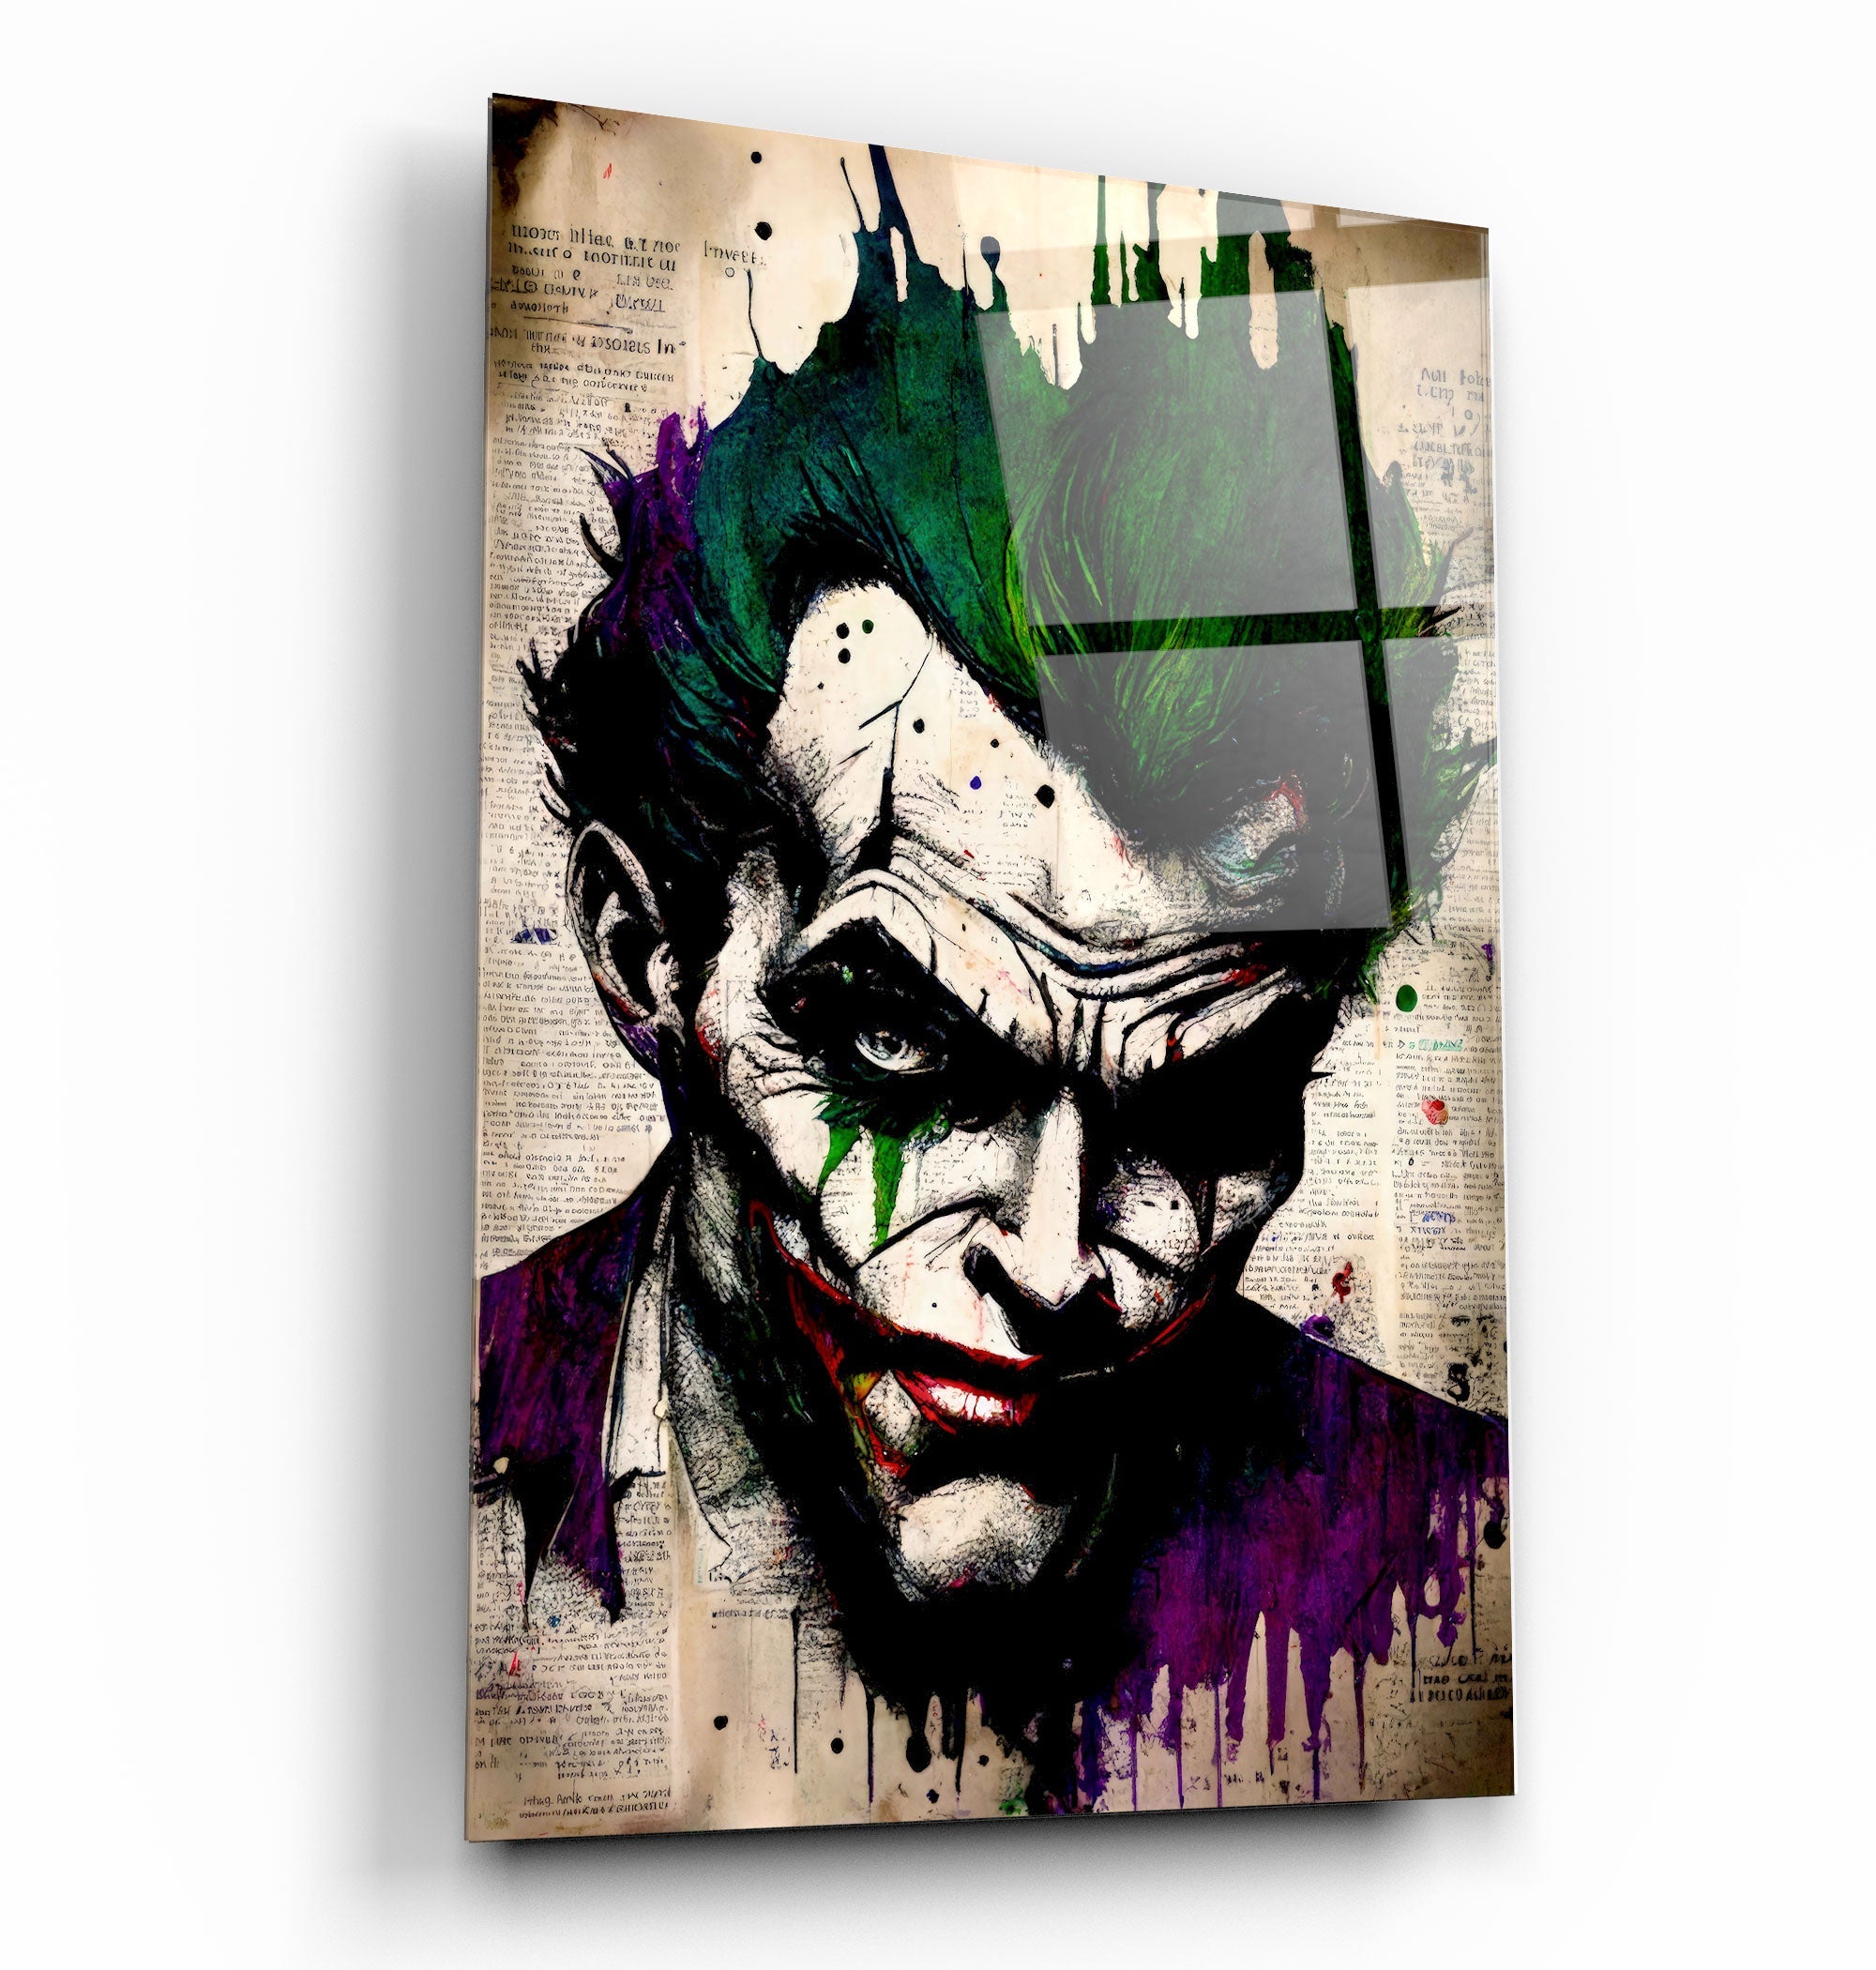 ・"Joker redessiné"・Art mural en verre de la collection du designer